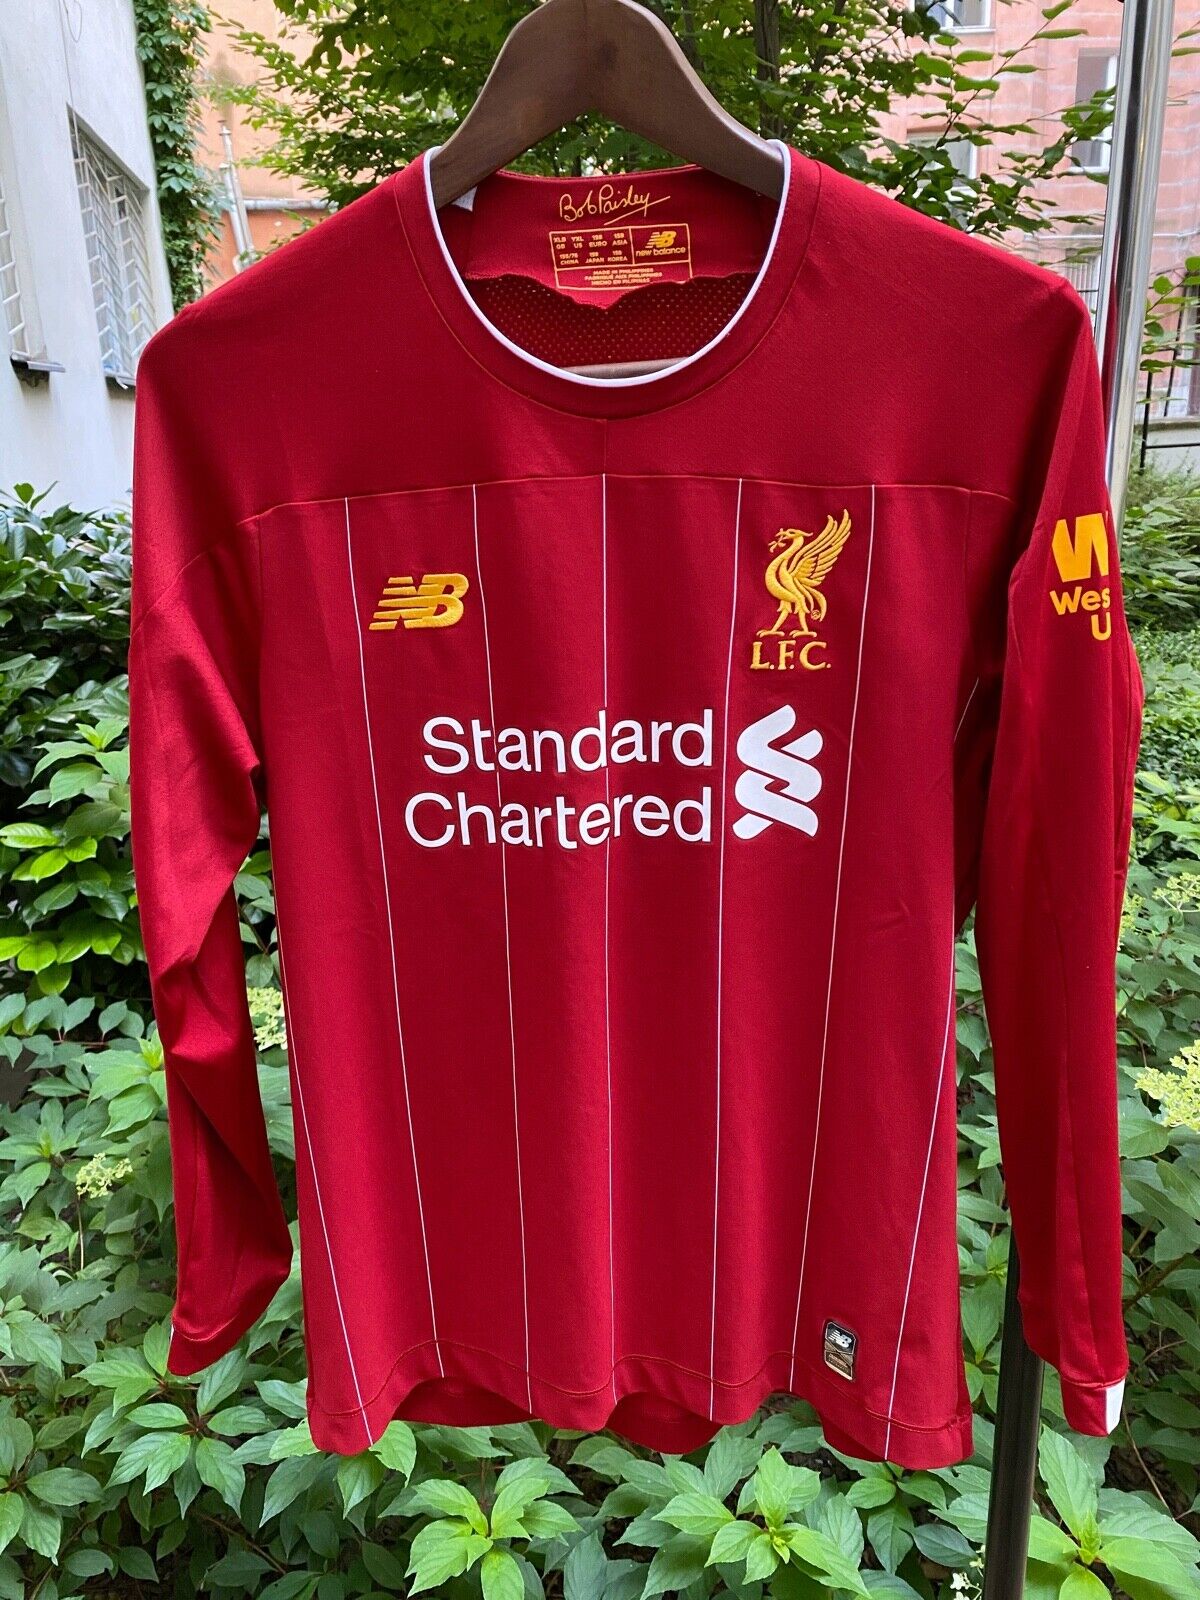 Zakenman Reparatie mogelijk plaats Liverpool FC New Balance Bob Paisley 2019 Soccer Jersey football shirt size  XS | eBay